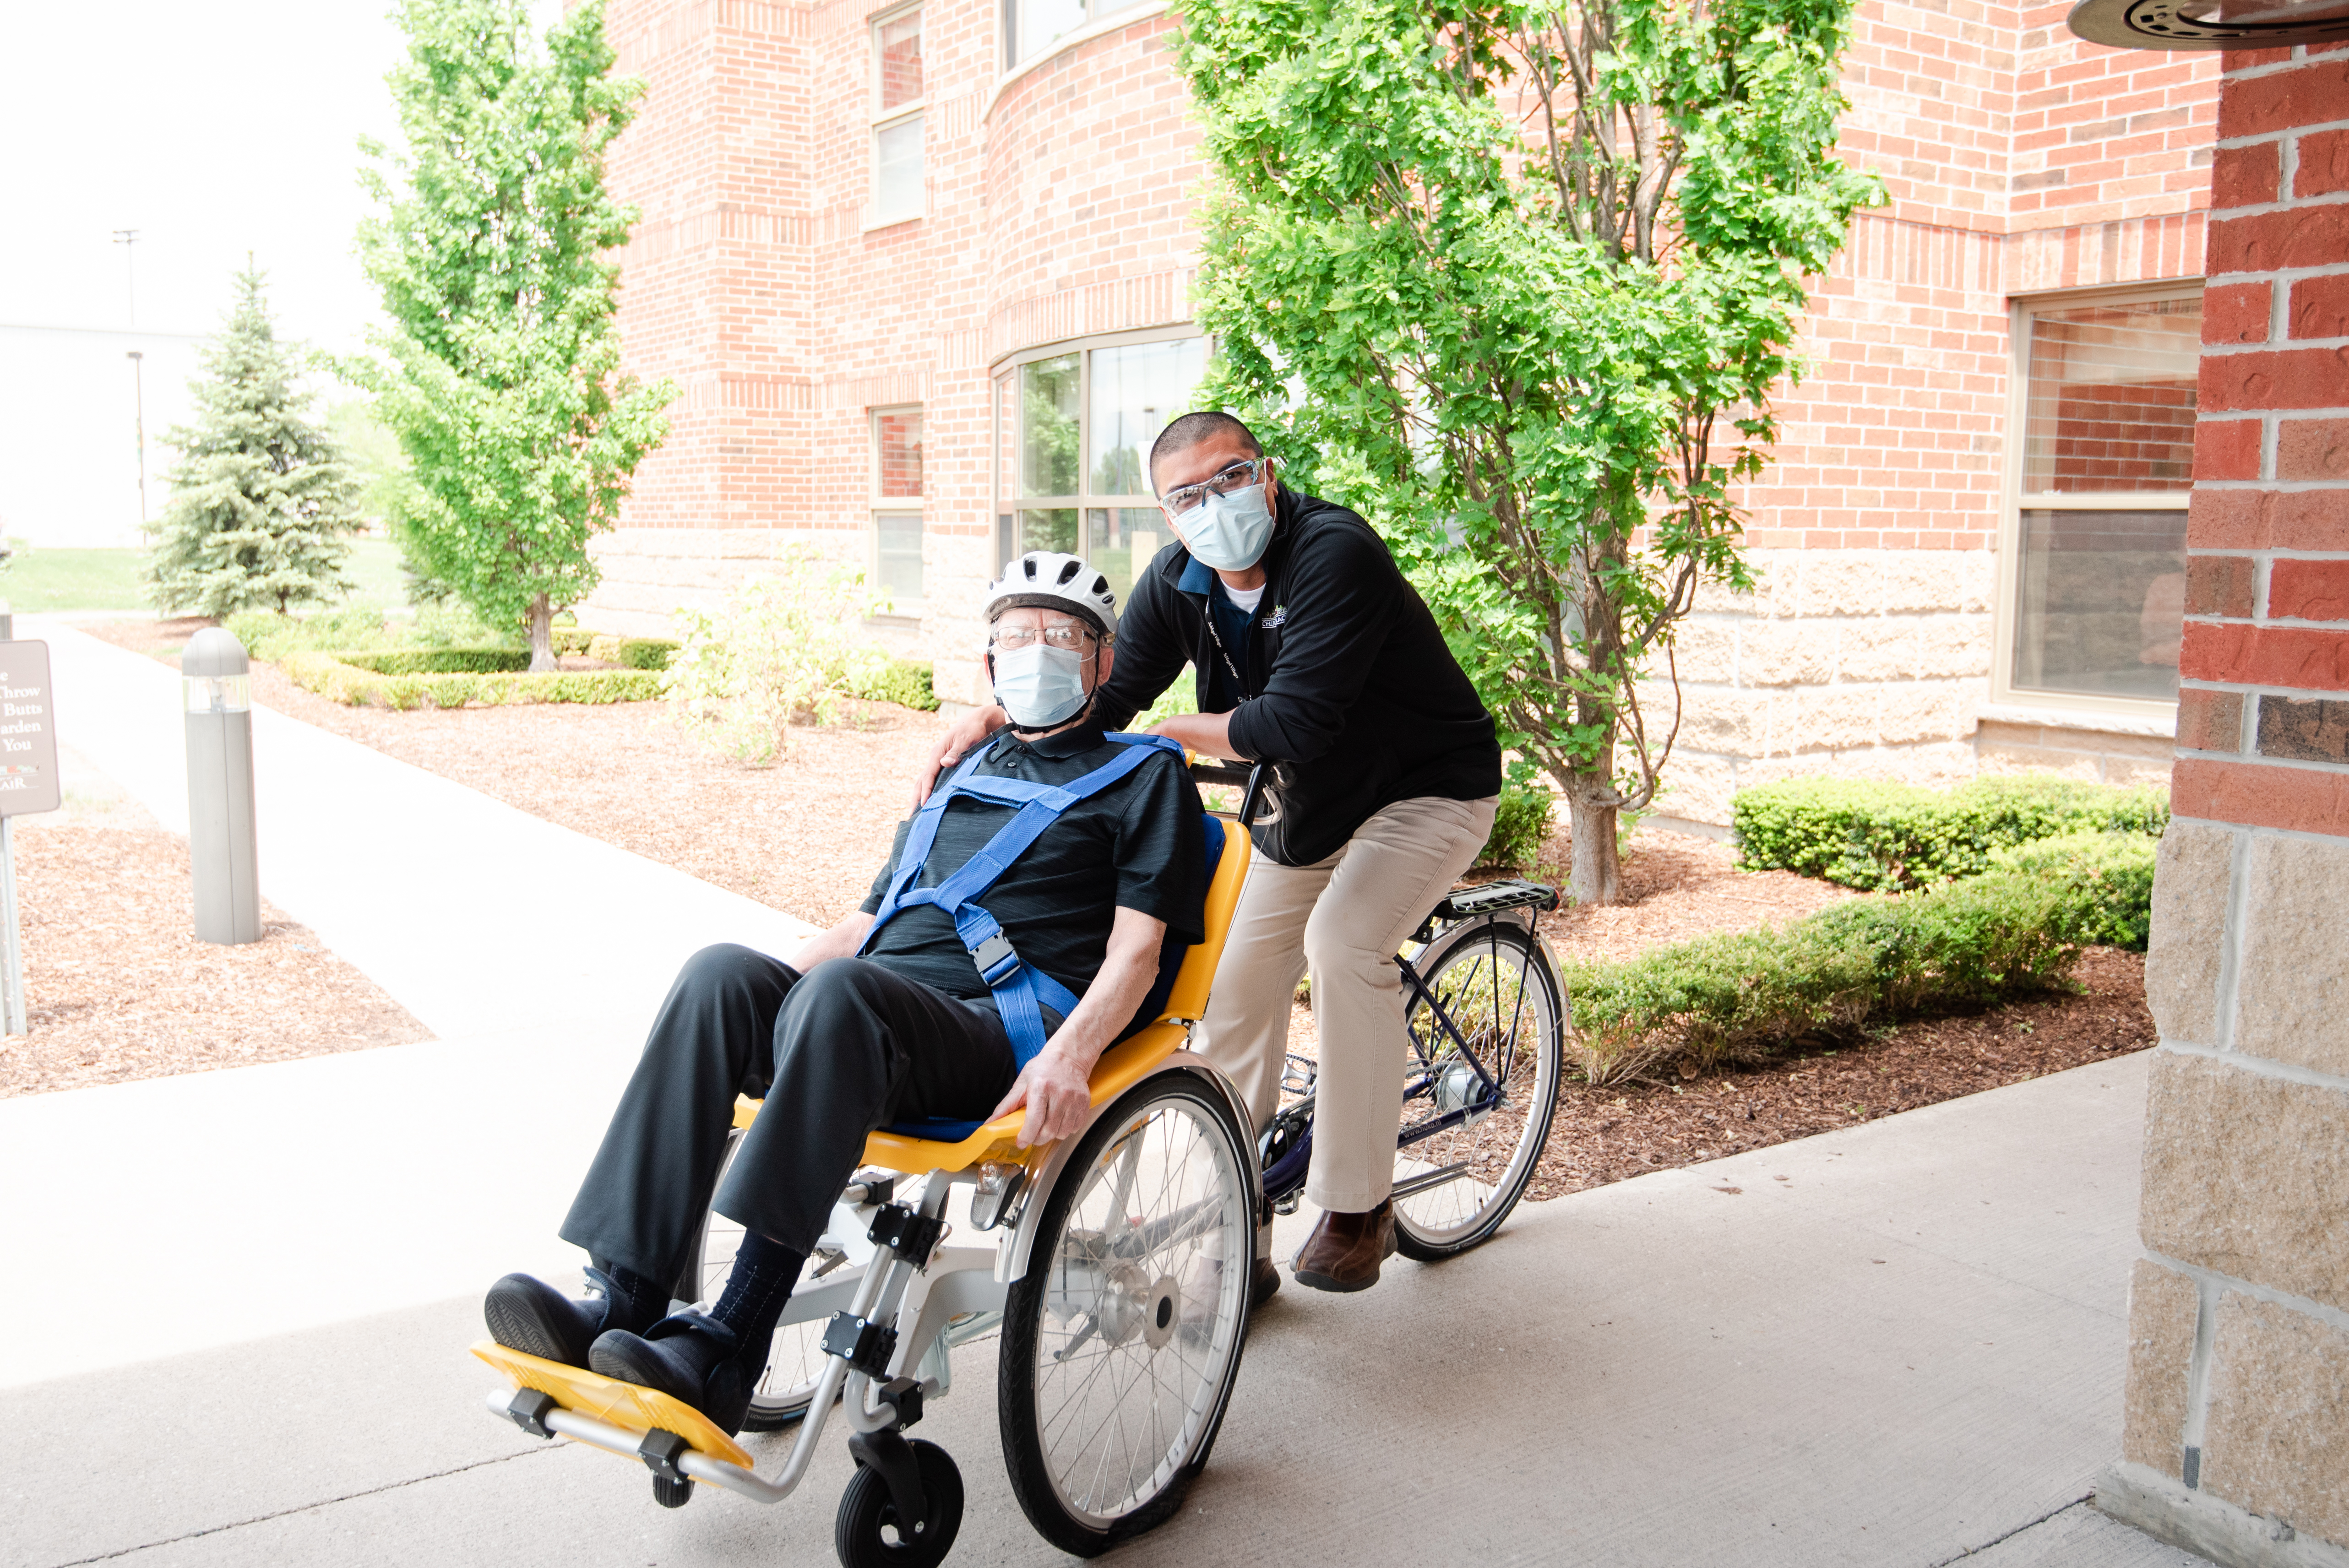 Resident and team member enjoying a ride on an adaptive bike